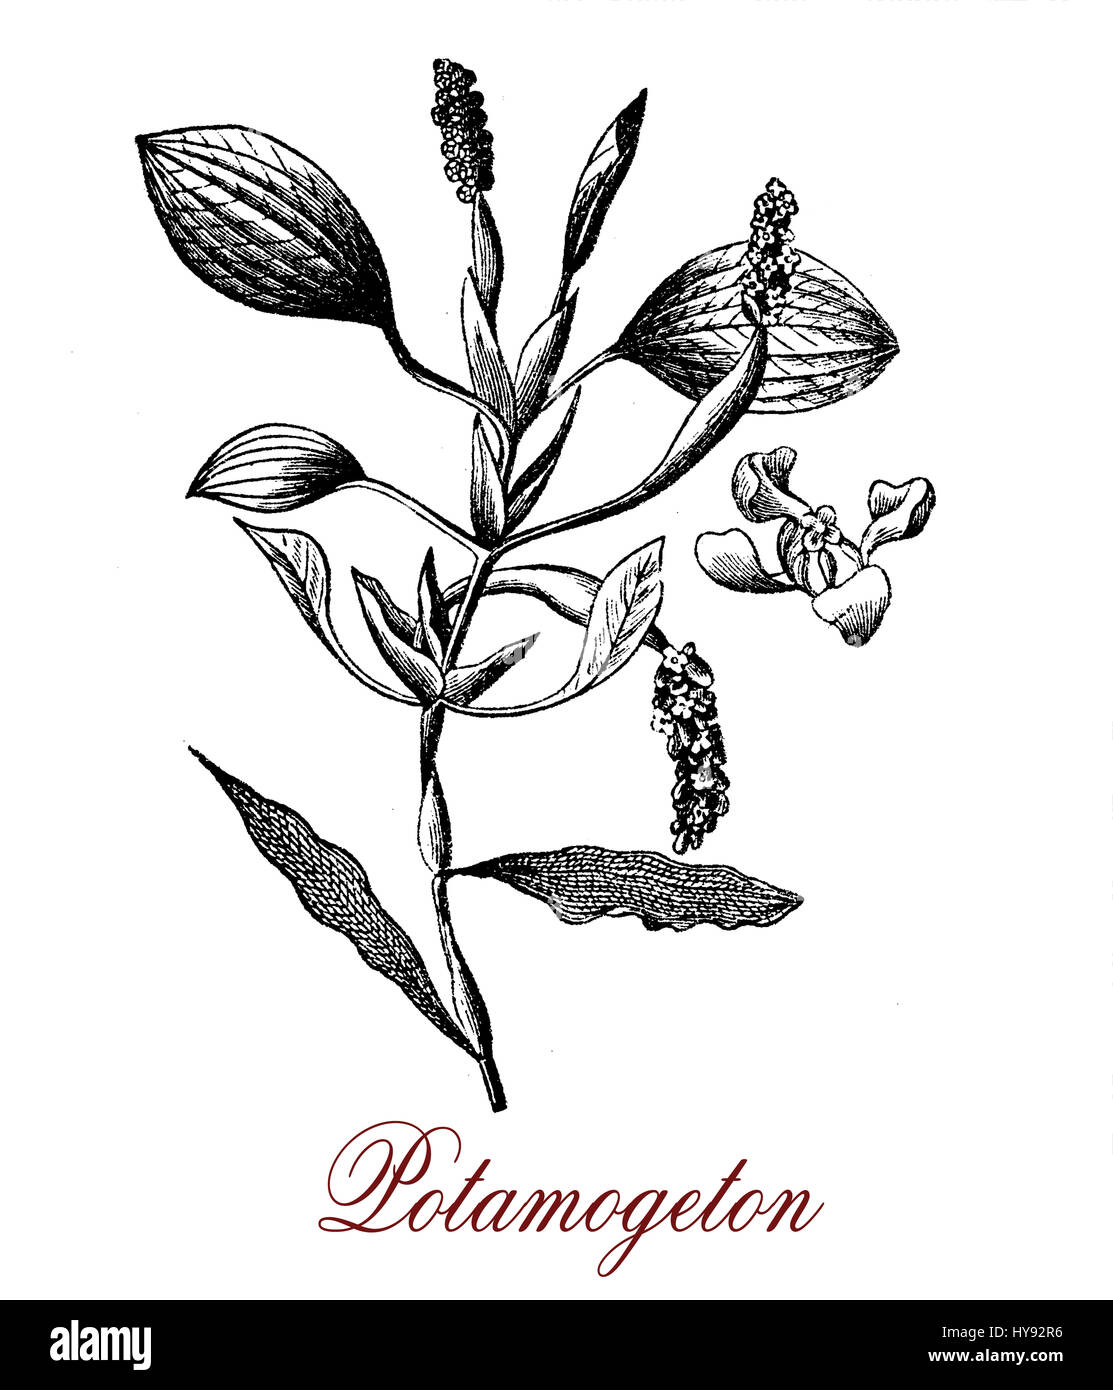 Vintage engraving of Potamogeton or pondweed aquatic plant in standing or running water Stock Photo